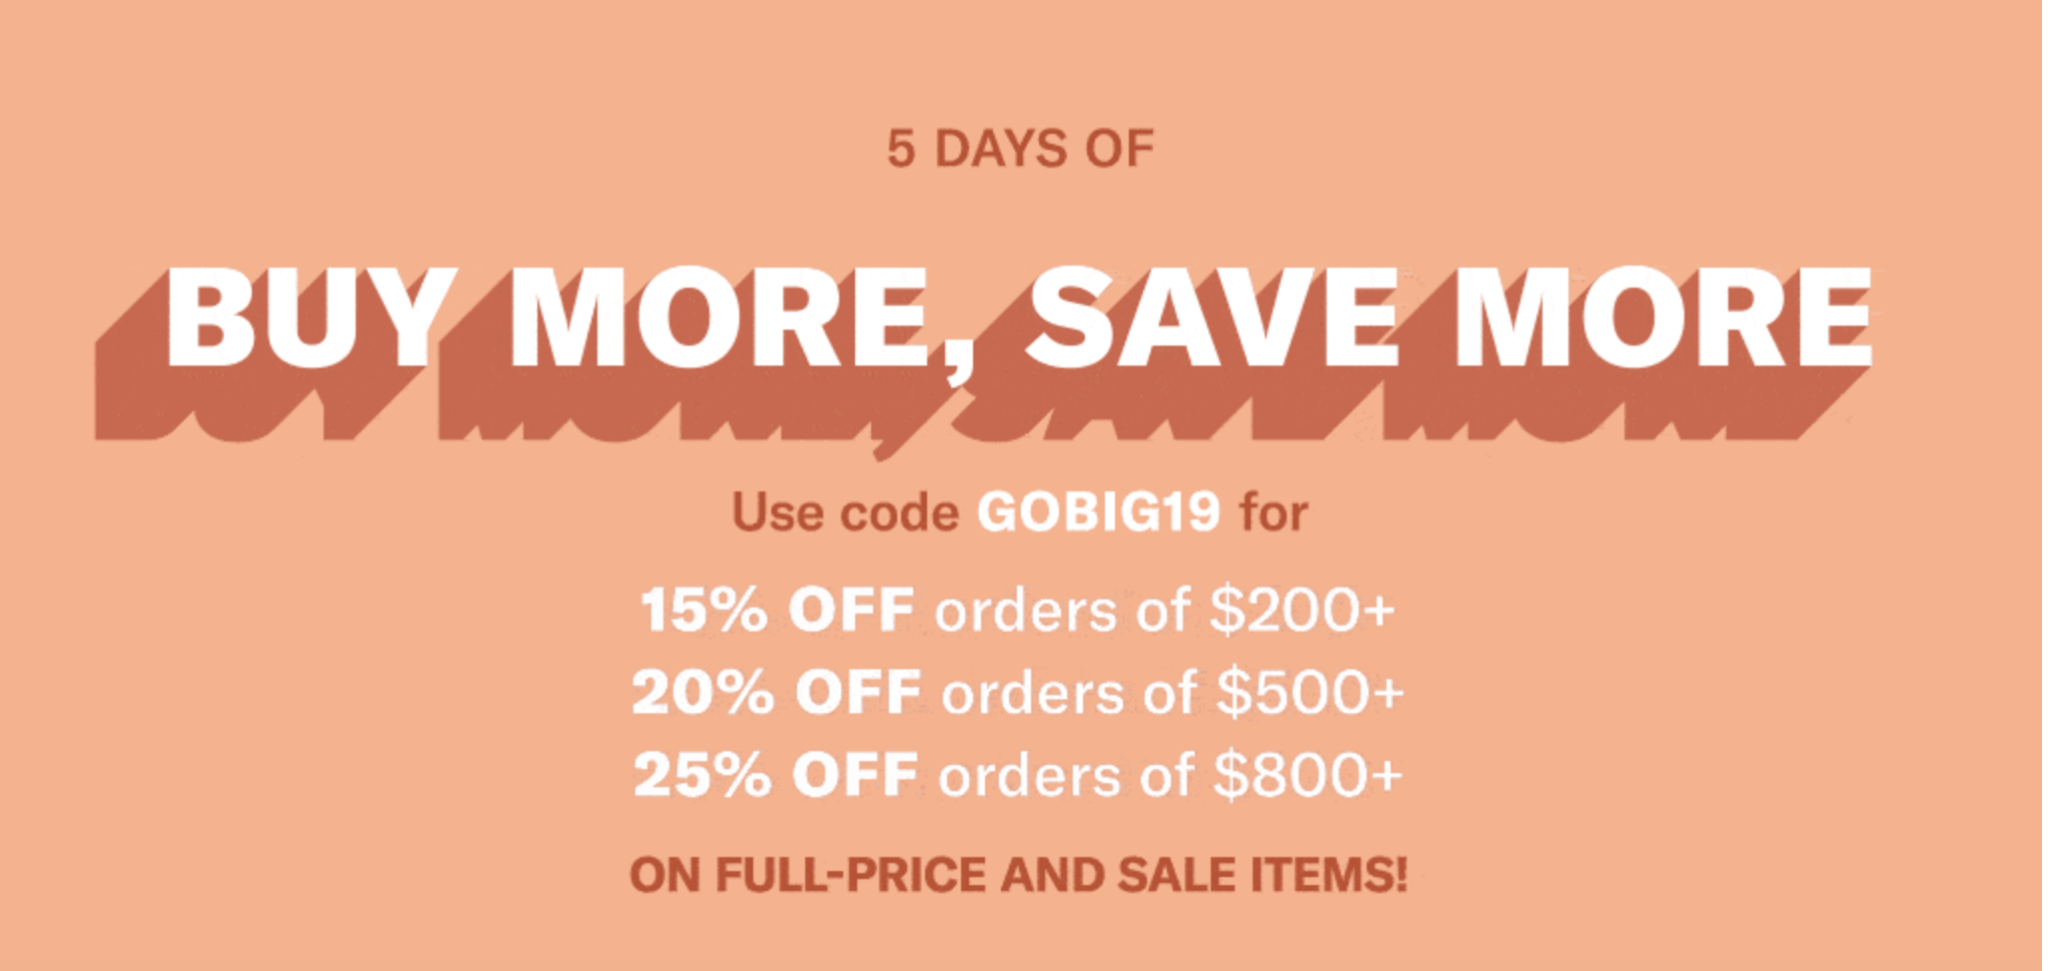 Shopbop Buy More Save More Sale - Cristin Cooper